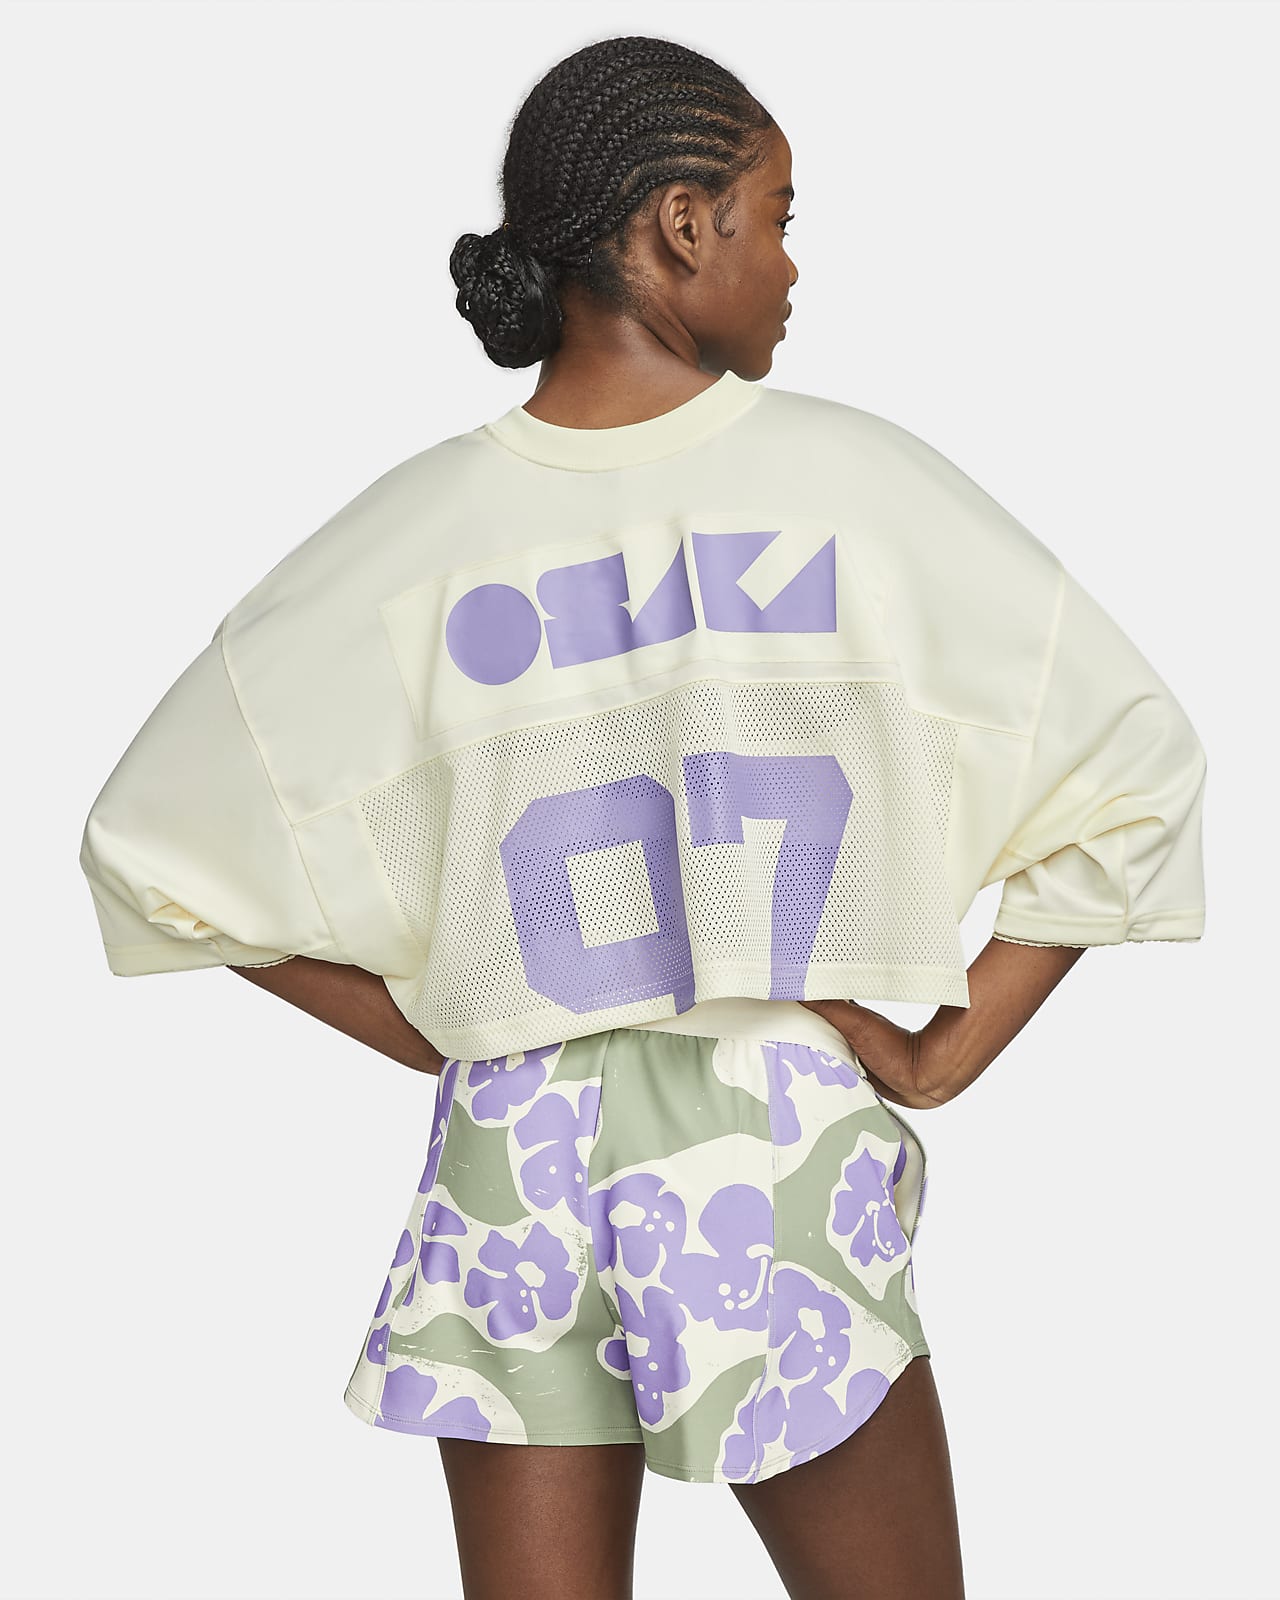 Nike Women's Naomi Osaka Jersey in White, Size: Medium | DX1827-113